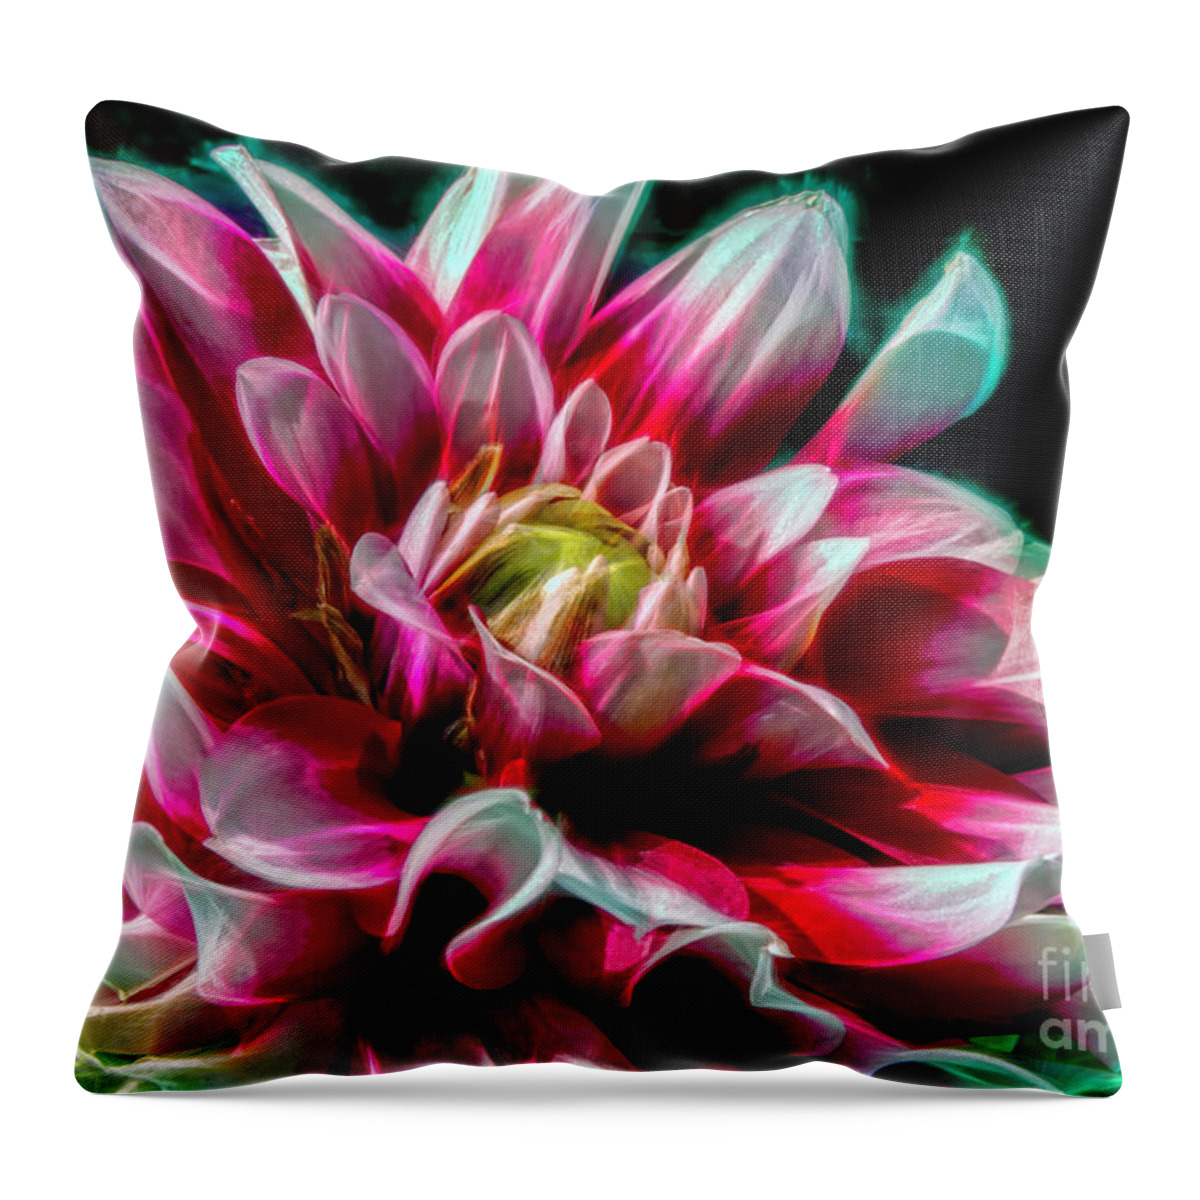 Flower Throw Pillow featuring the digital art Forever Endeavor by Jean OKeeffe Macro Abundance Art